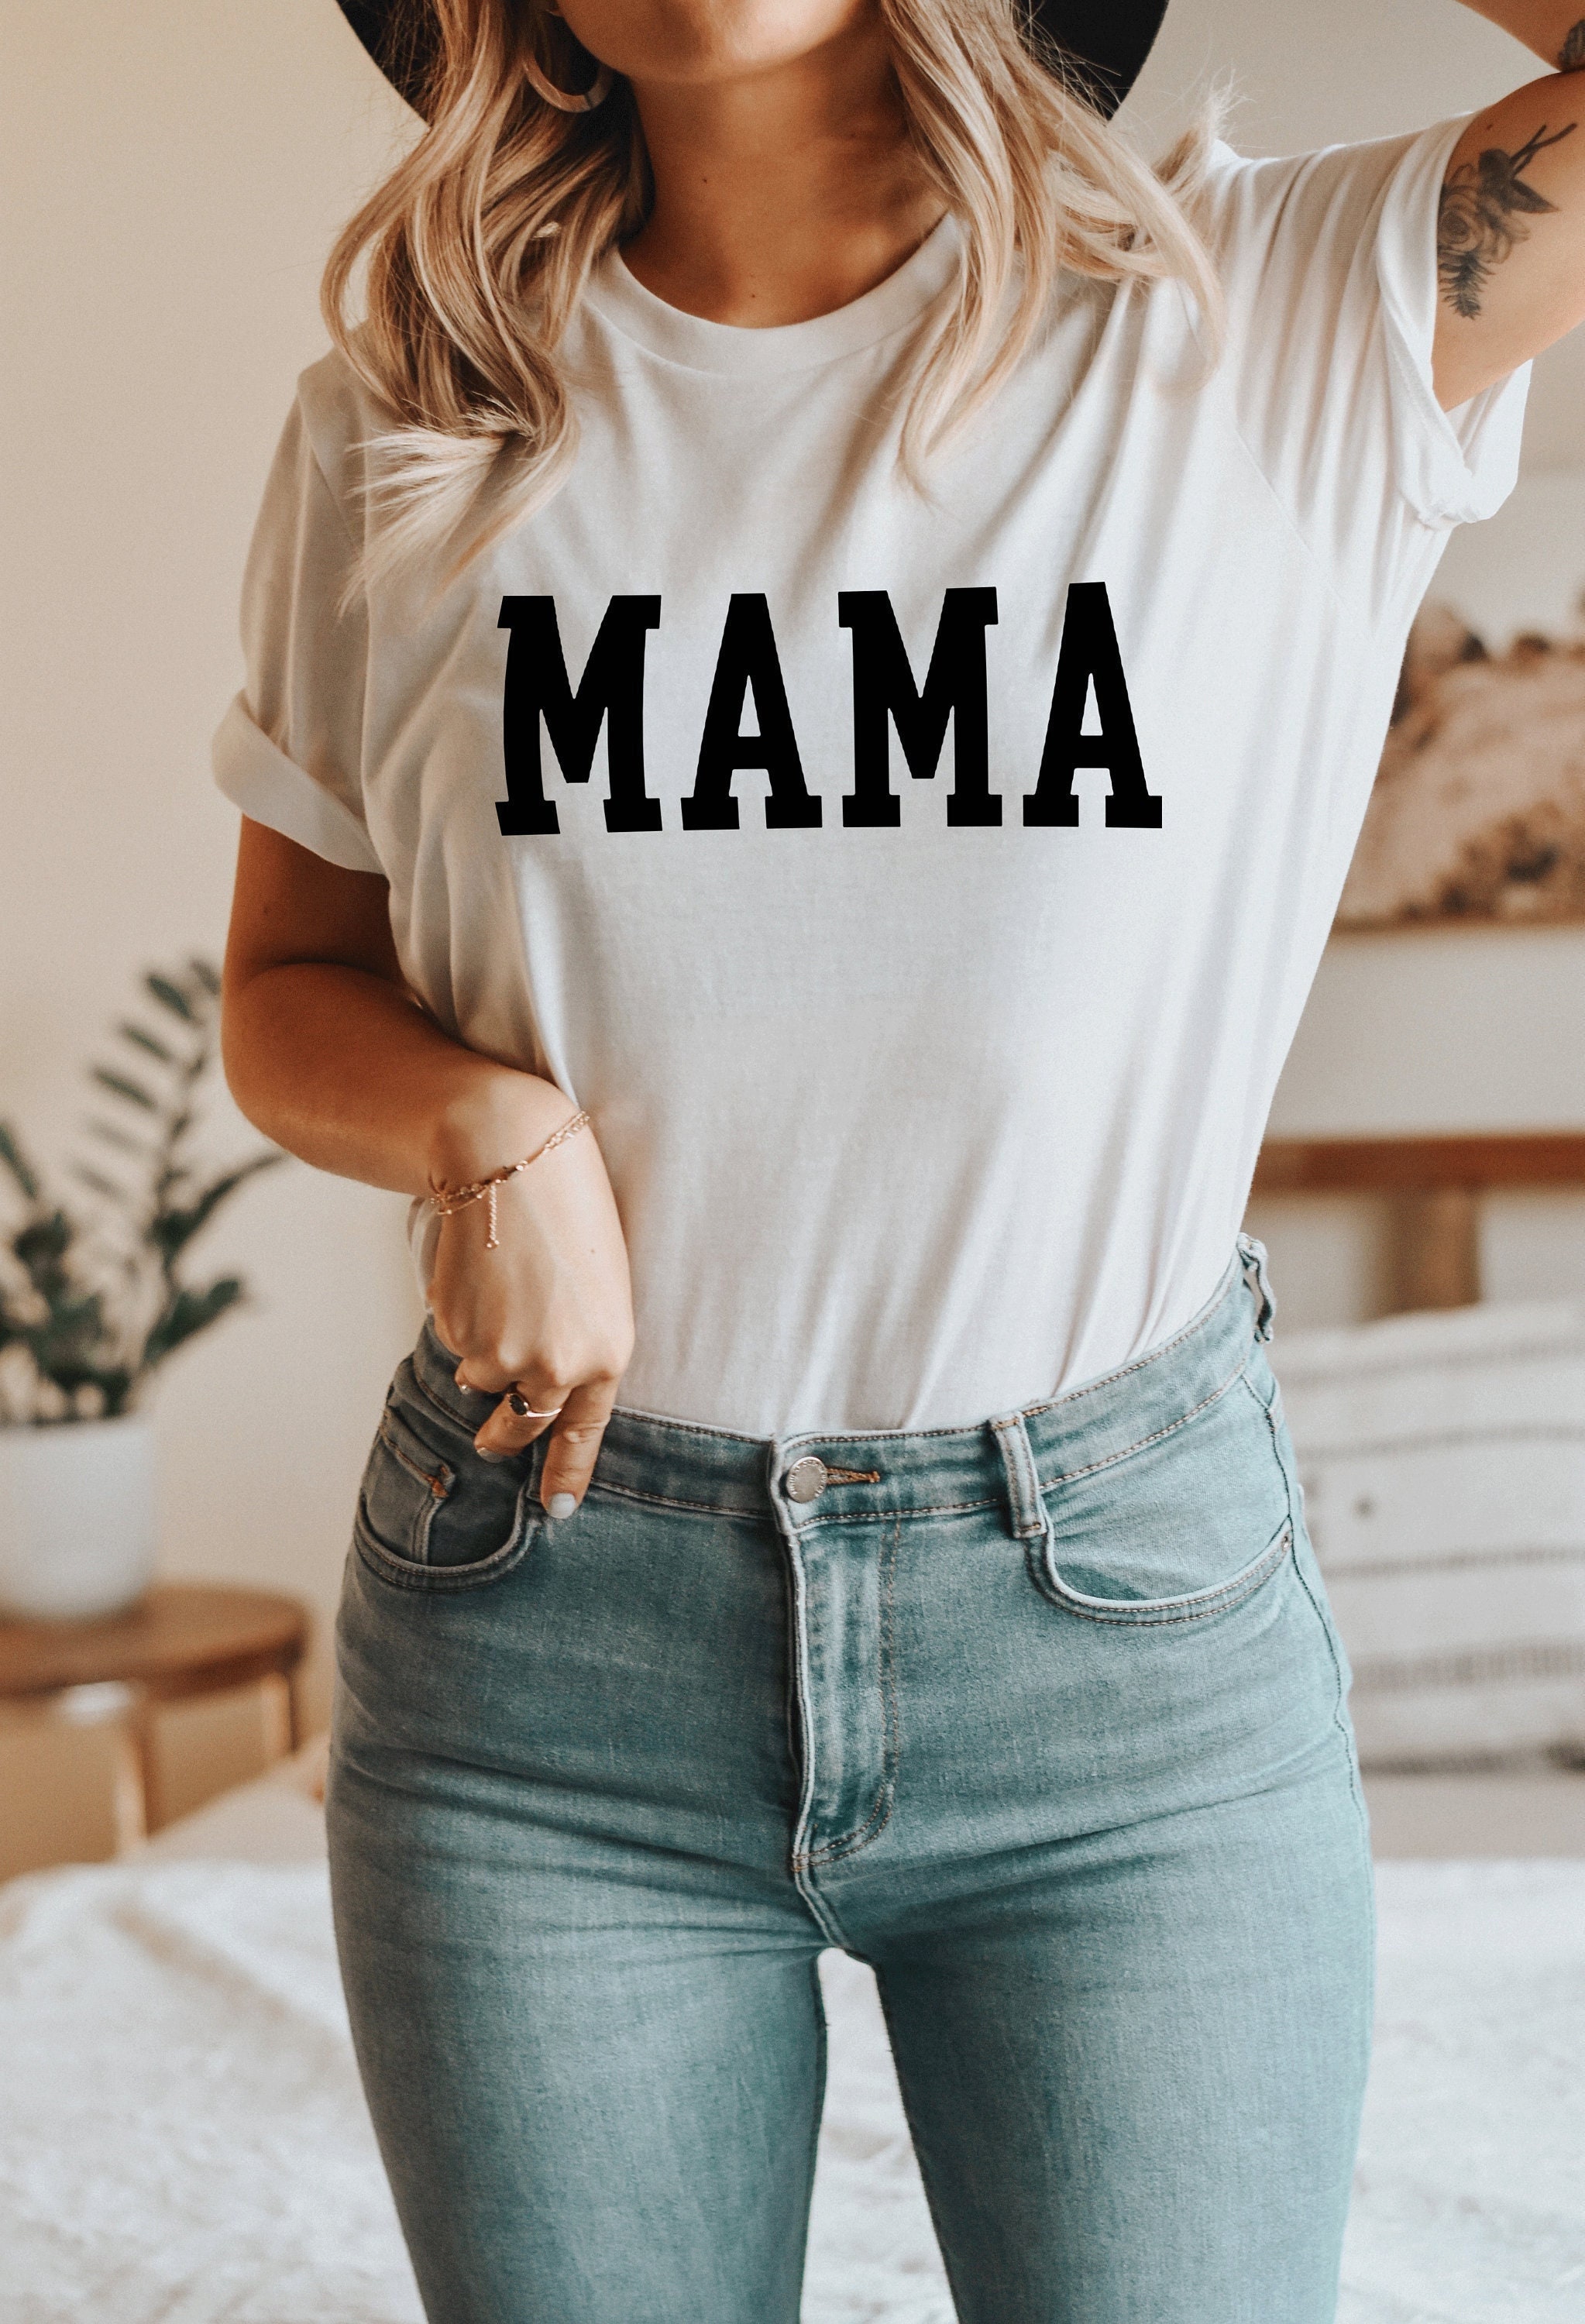 Mama Shirt, Mommy Shirt, Mama T-Shirt, Mom Shirt, Cute Mom Shirt, Mother’s Day Gift, Mom Life Shirt, Future Mama Shirt, Girl Mama Shirt